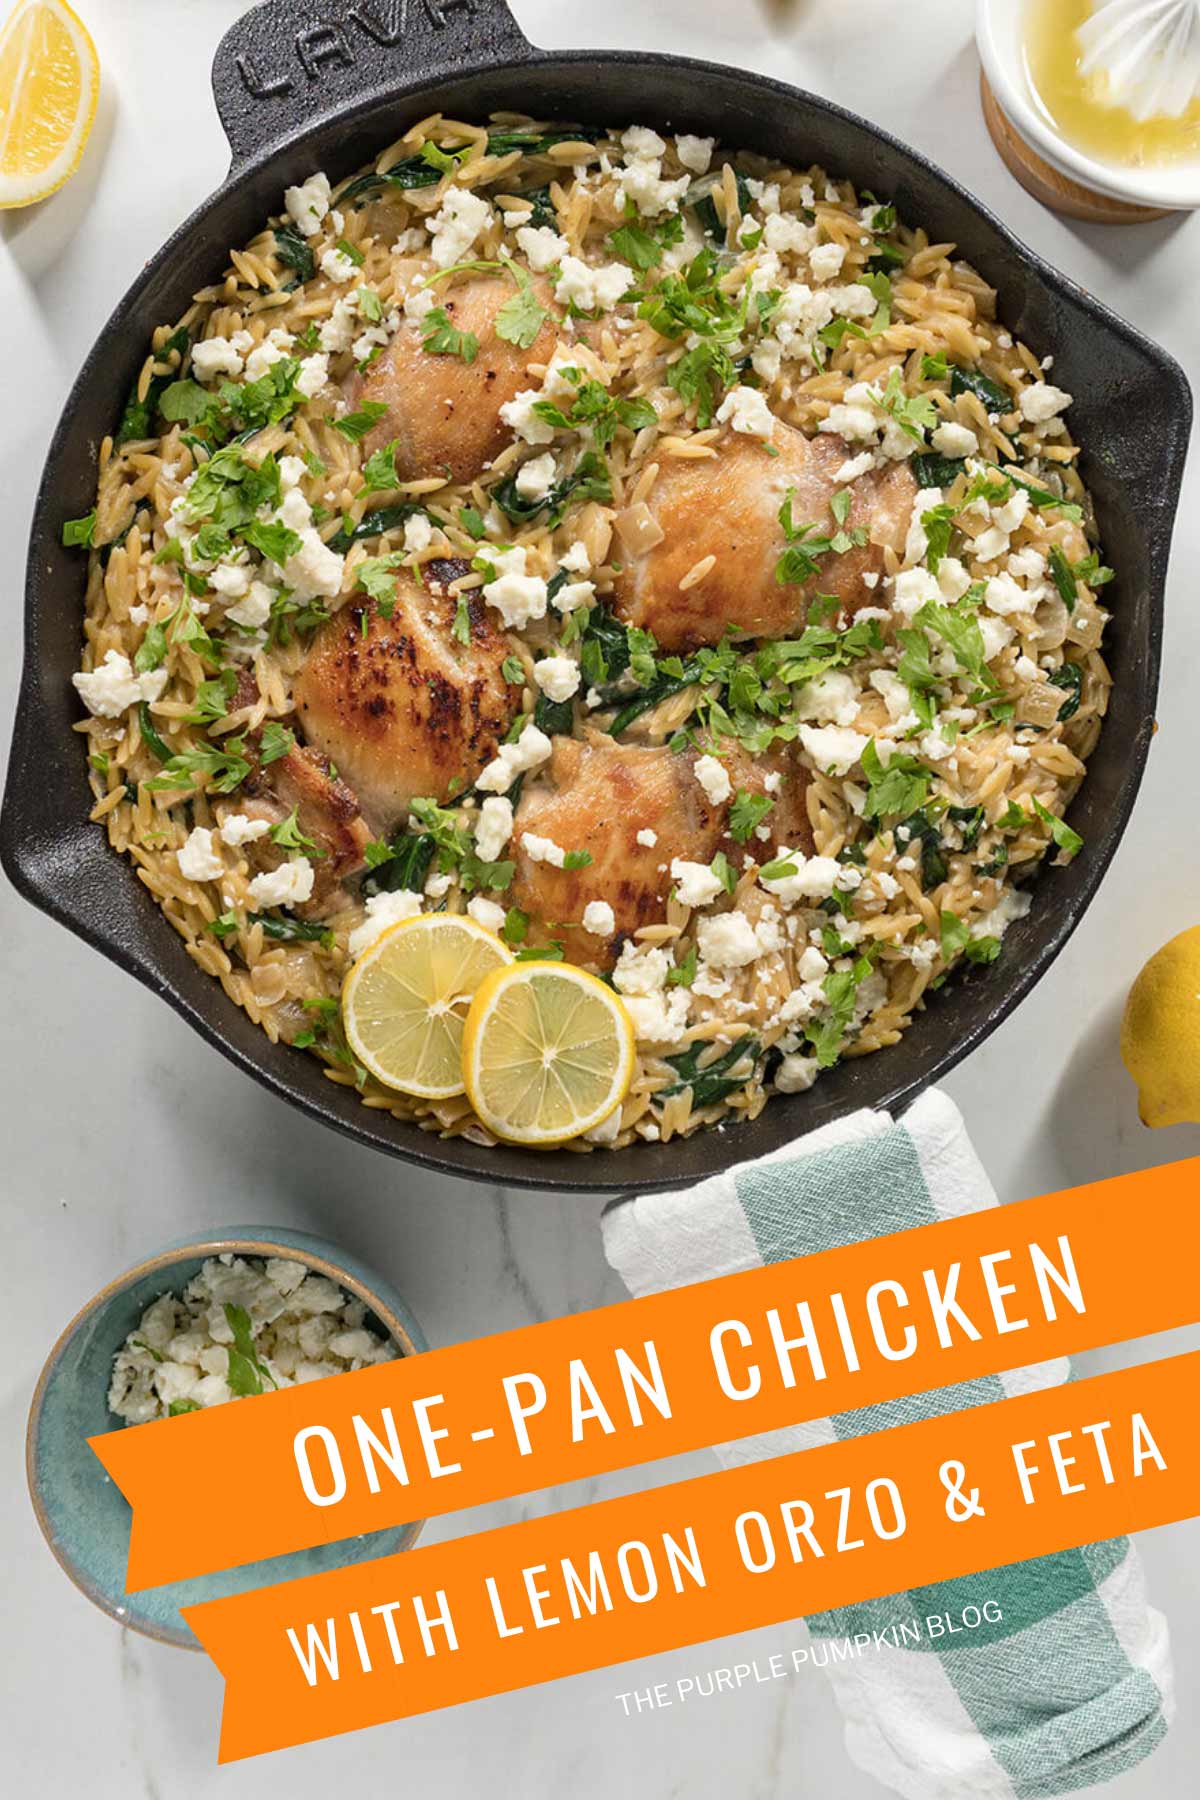 One-Pan-Chicken-with-Lemon-Orzo-Feta